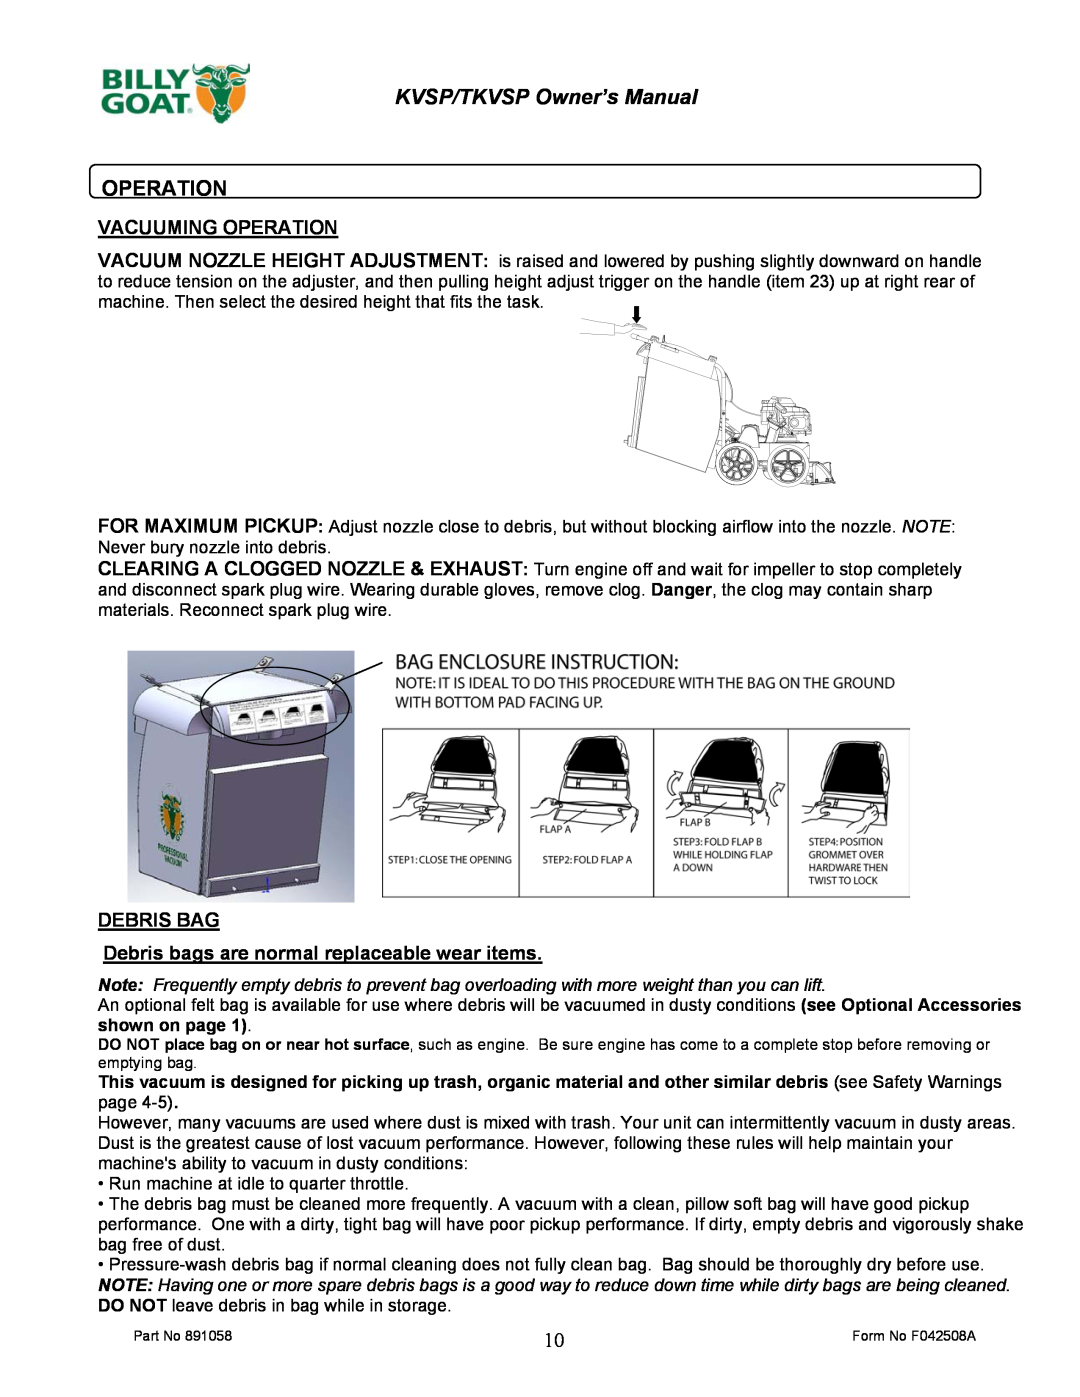 Billy Goat F042508A owner manual KVSP/TKVSP Owner’s Manual, Vacuuming Operation 